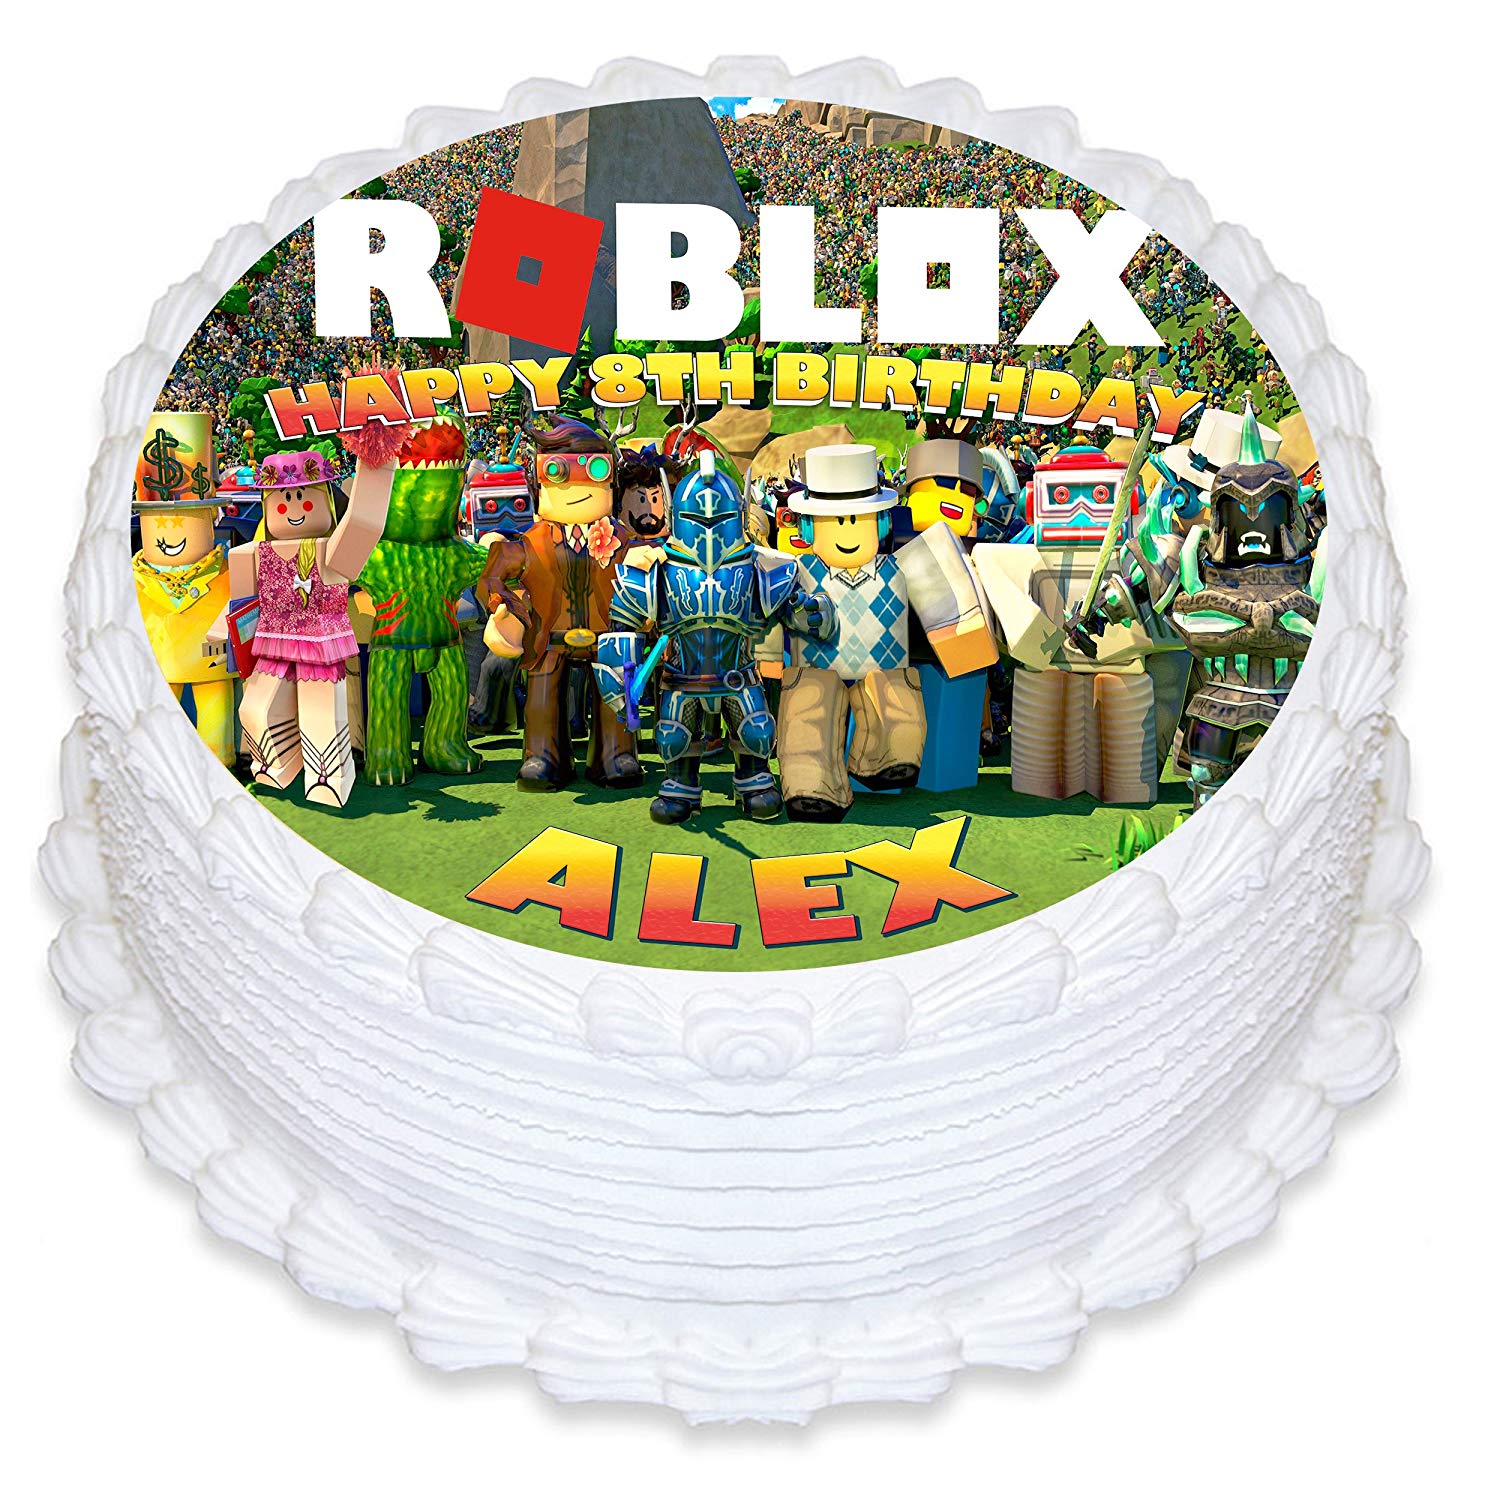 Roblox Doors Seek Edible Cake Toppers – Ediblecakeimage